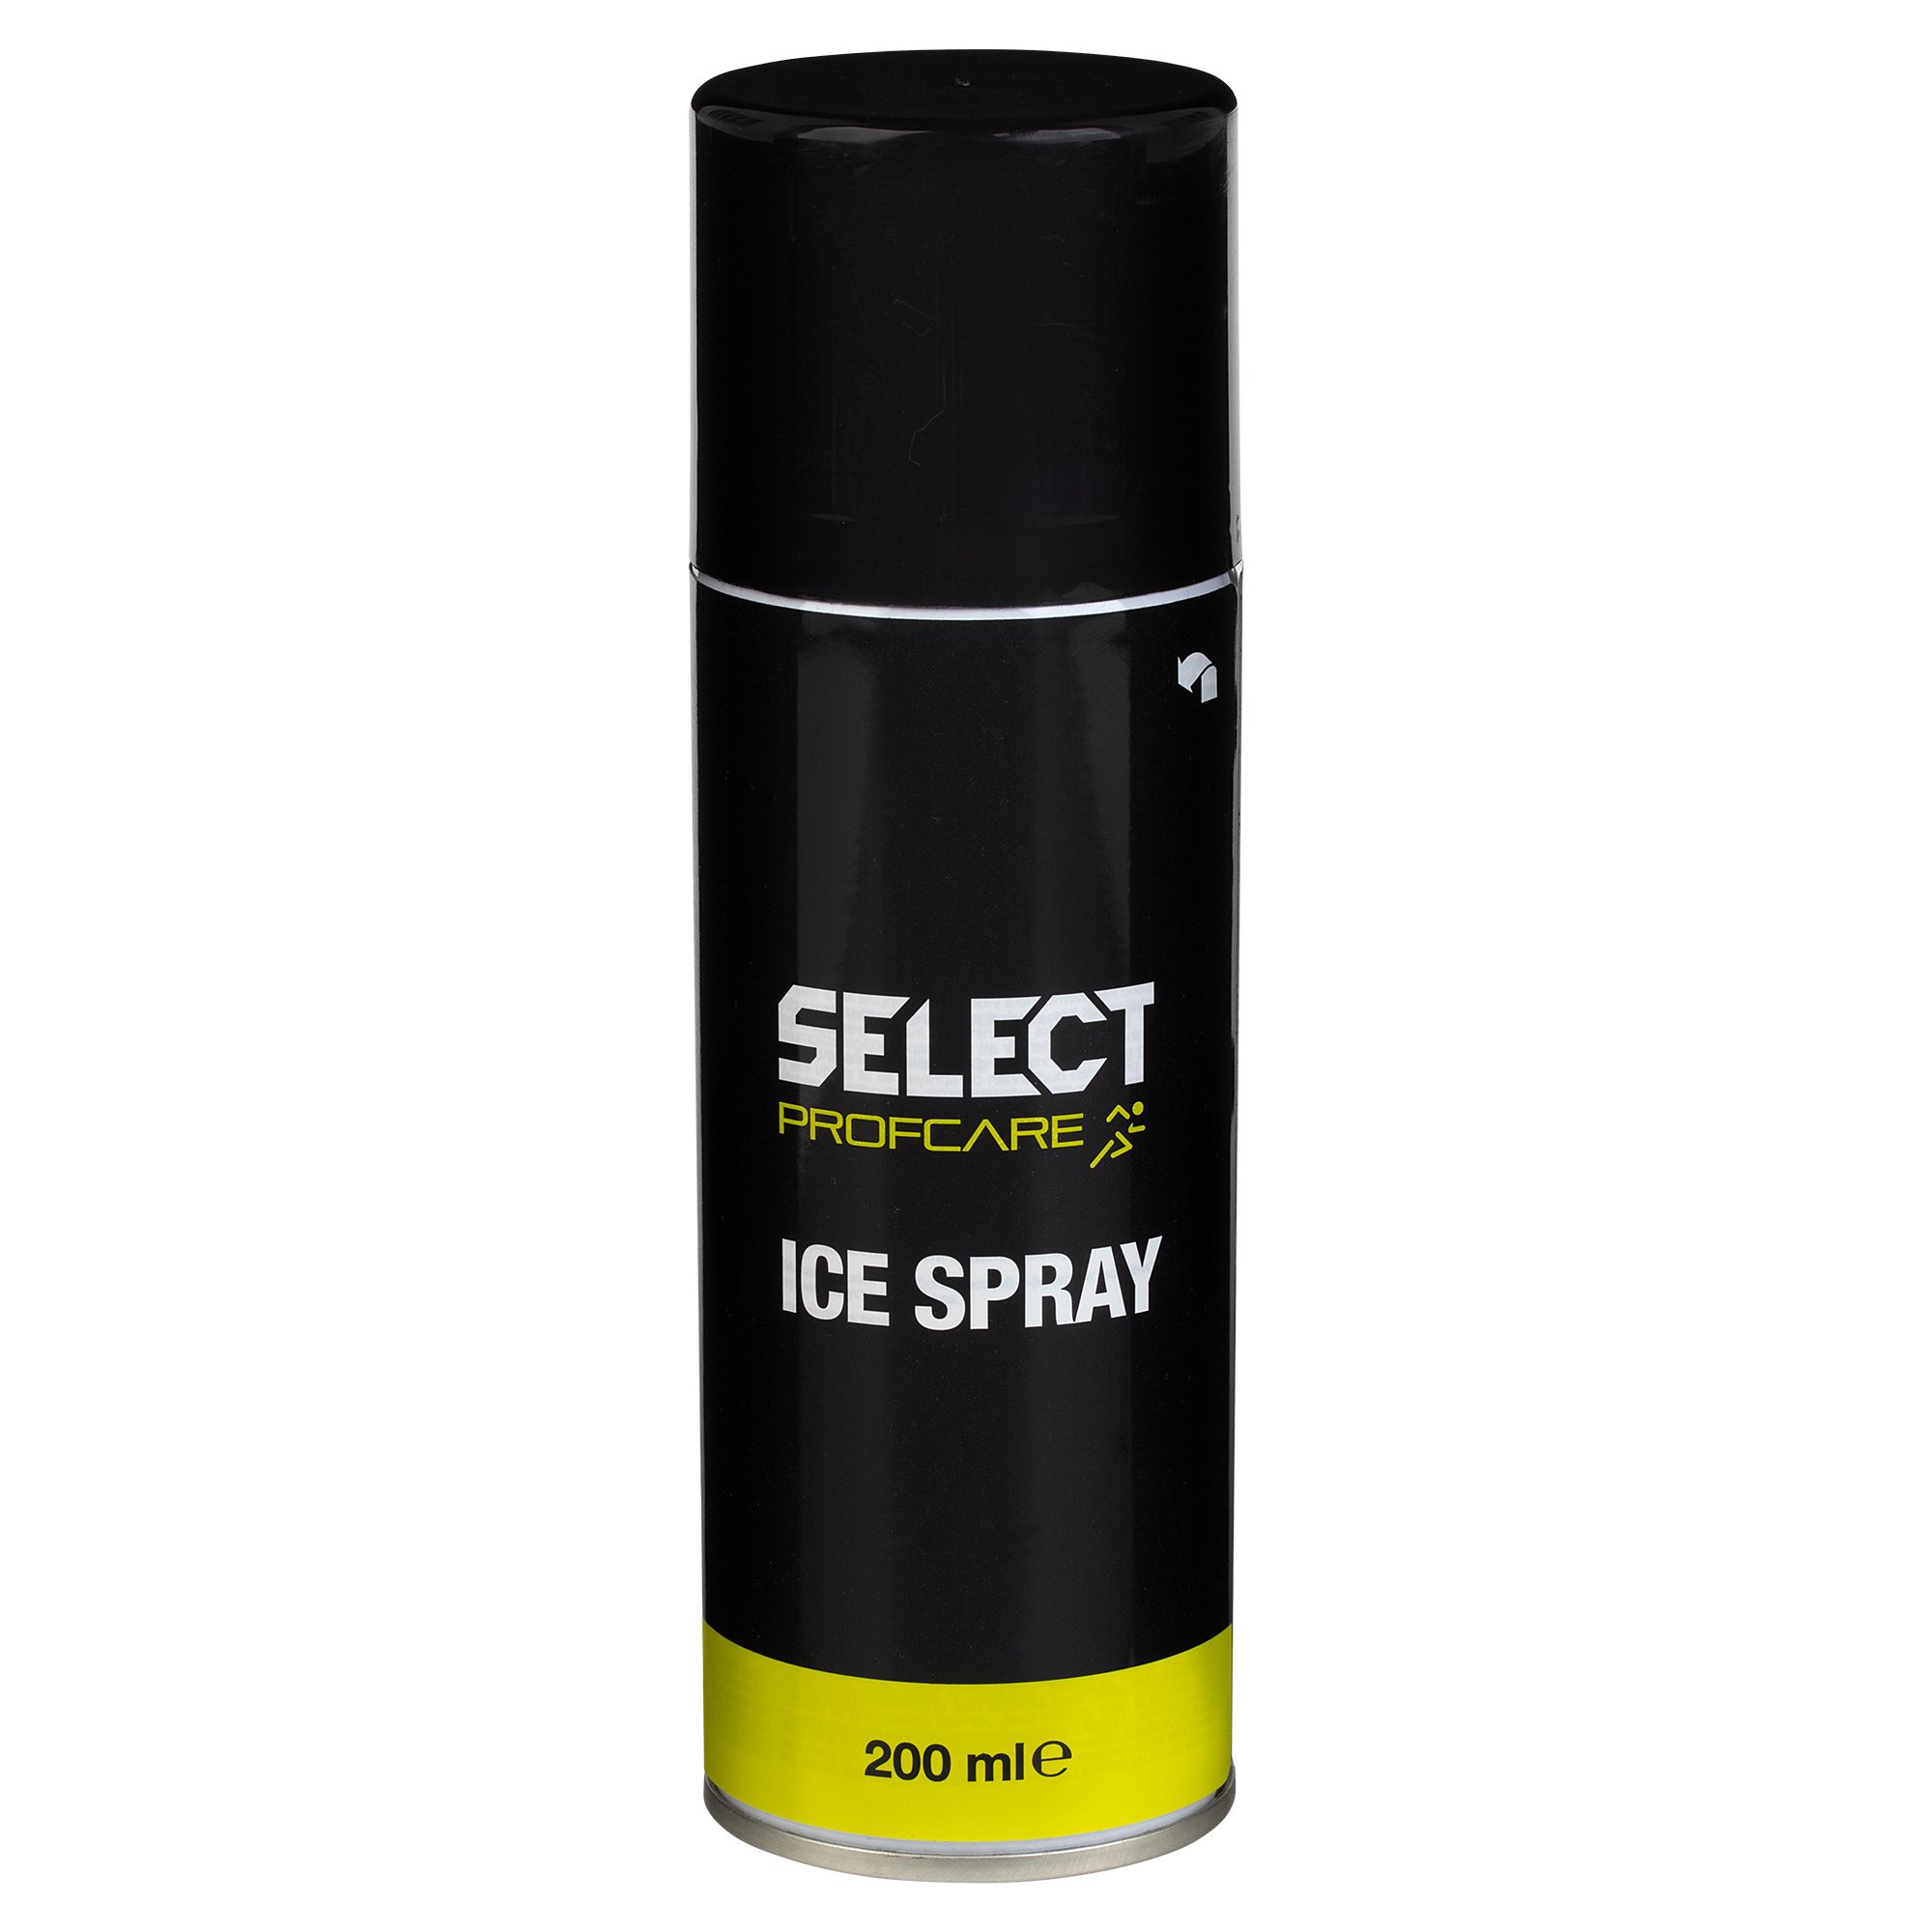 Select Ice Spray